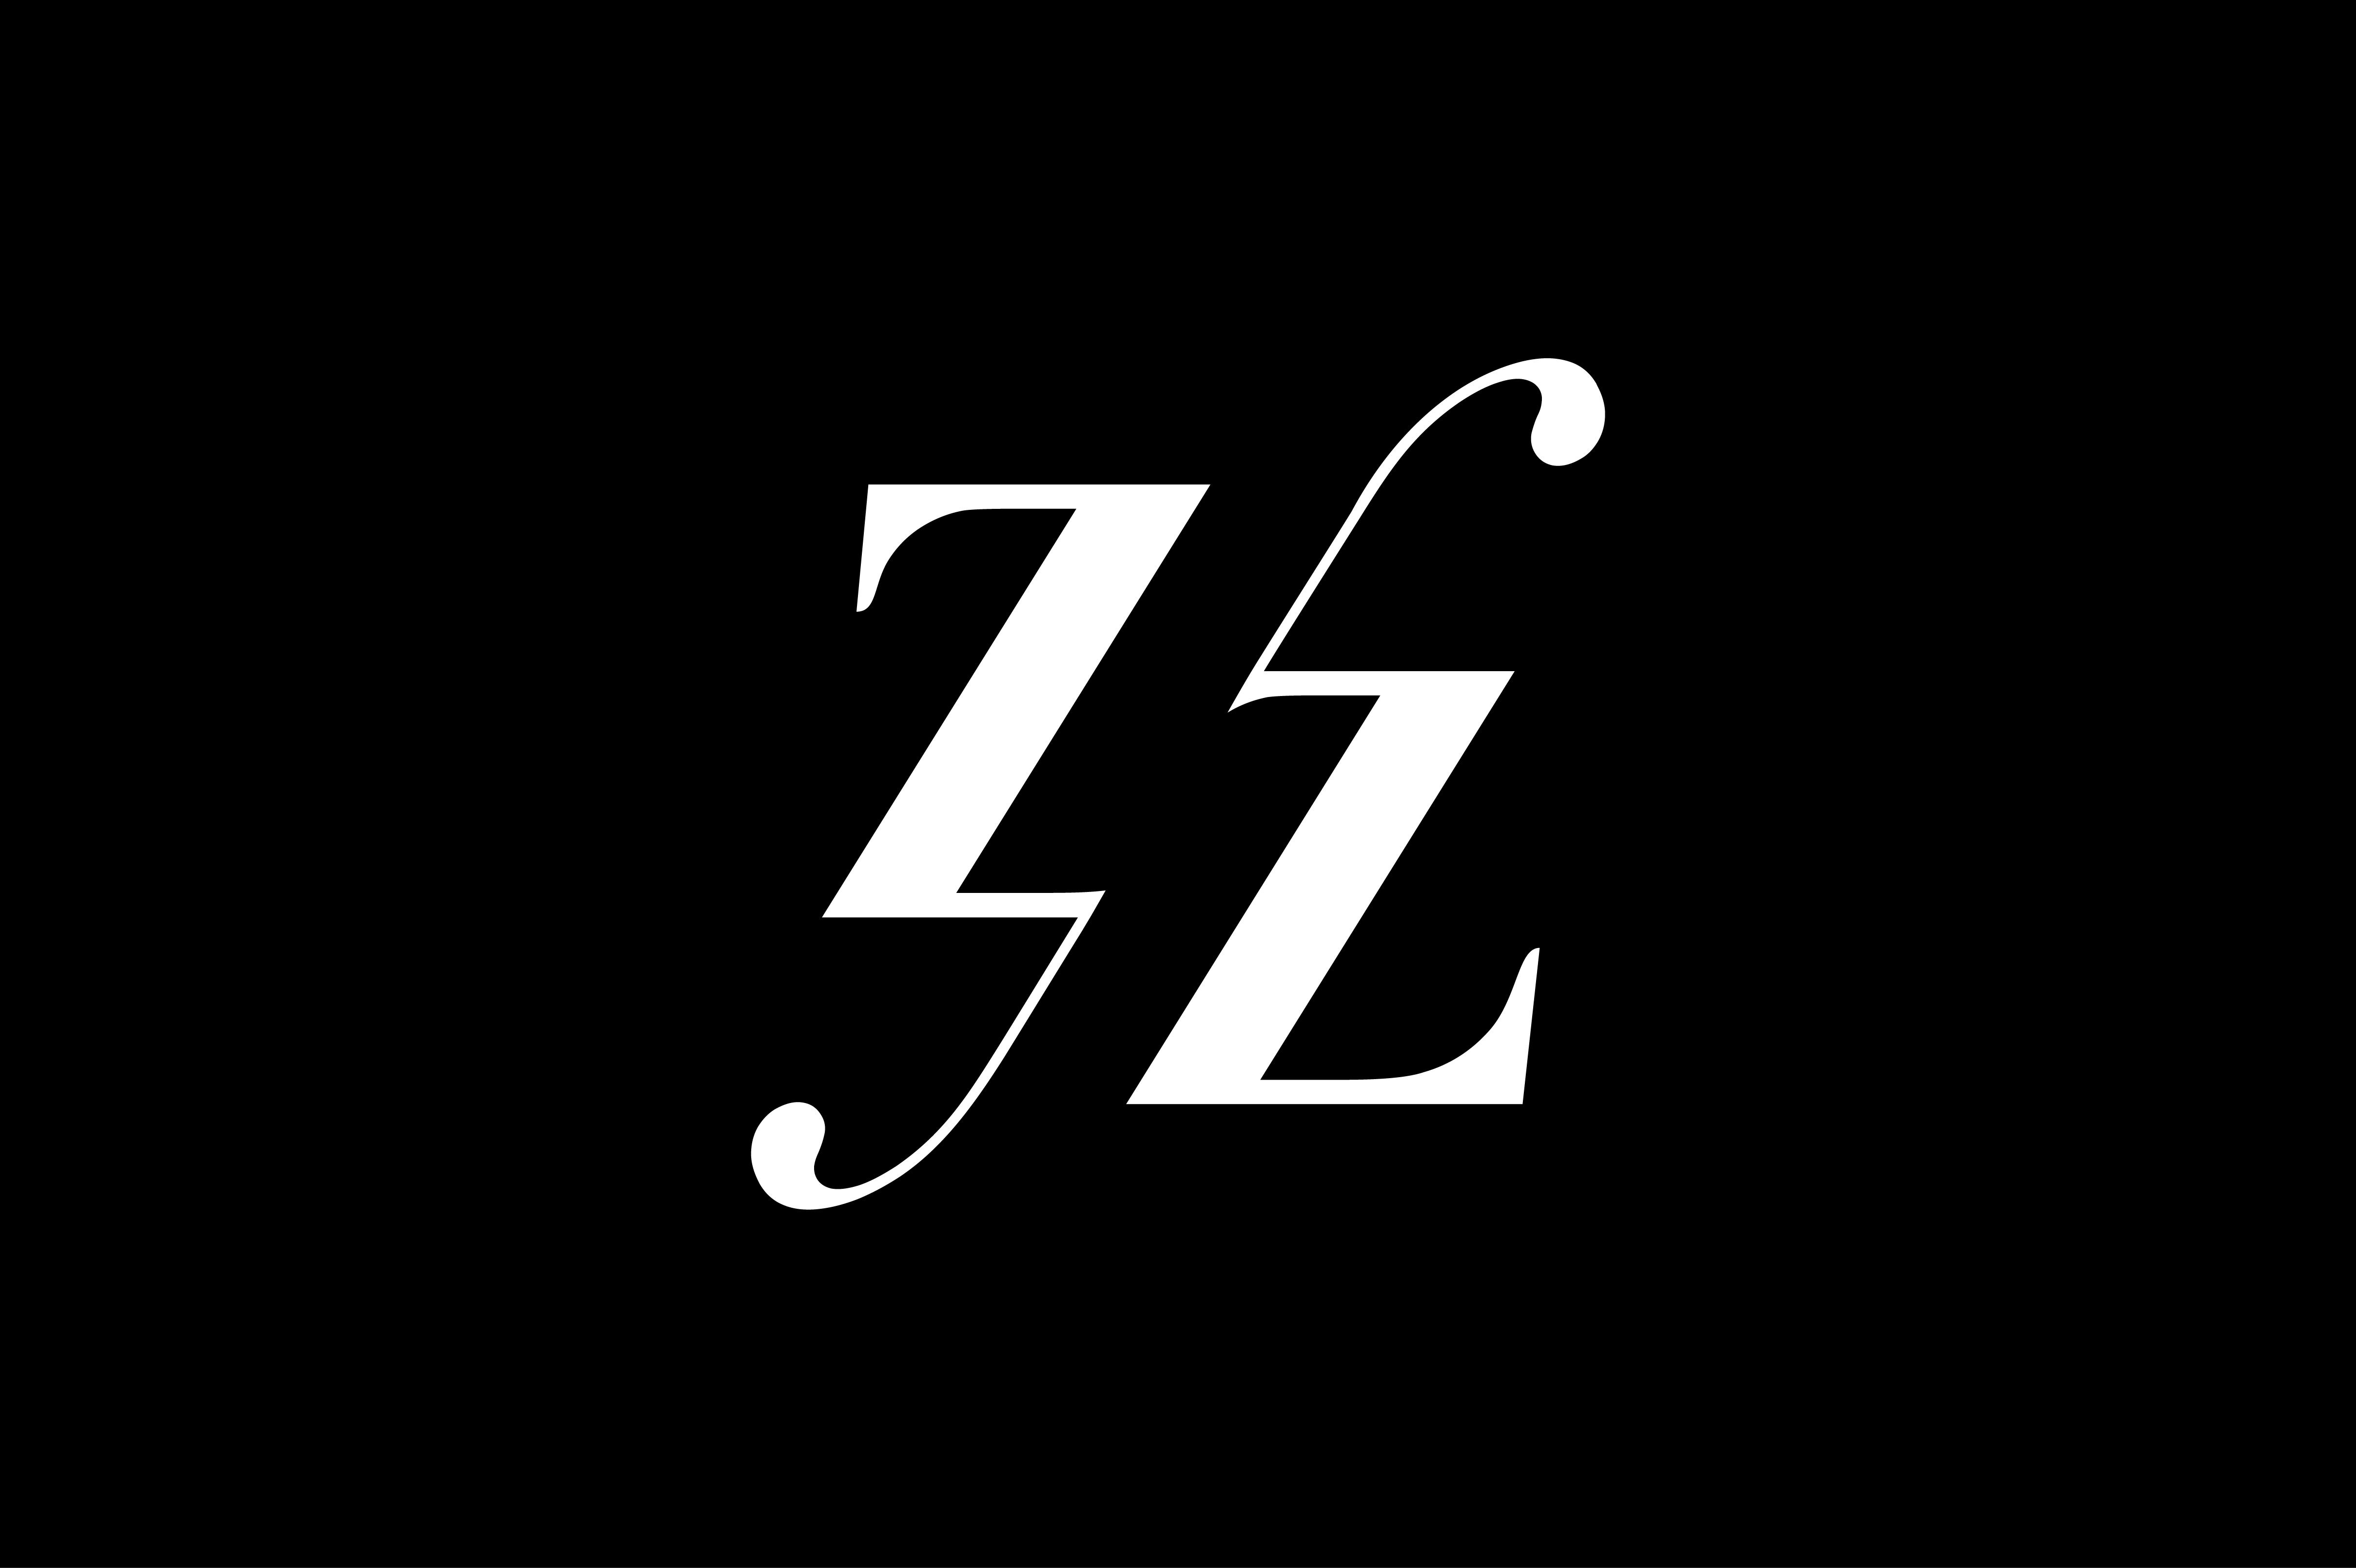 Zz Monogram Logo Design By Vectorseller Thehungryjpeg Com